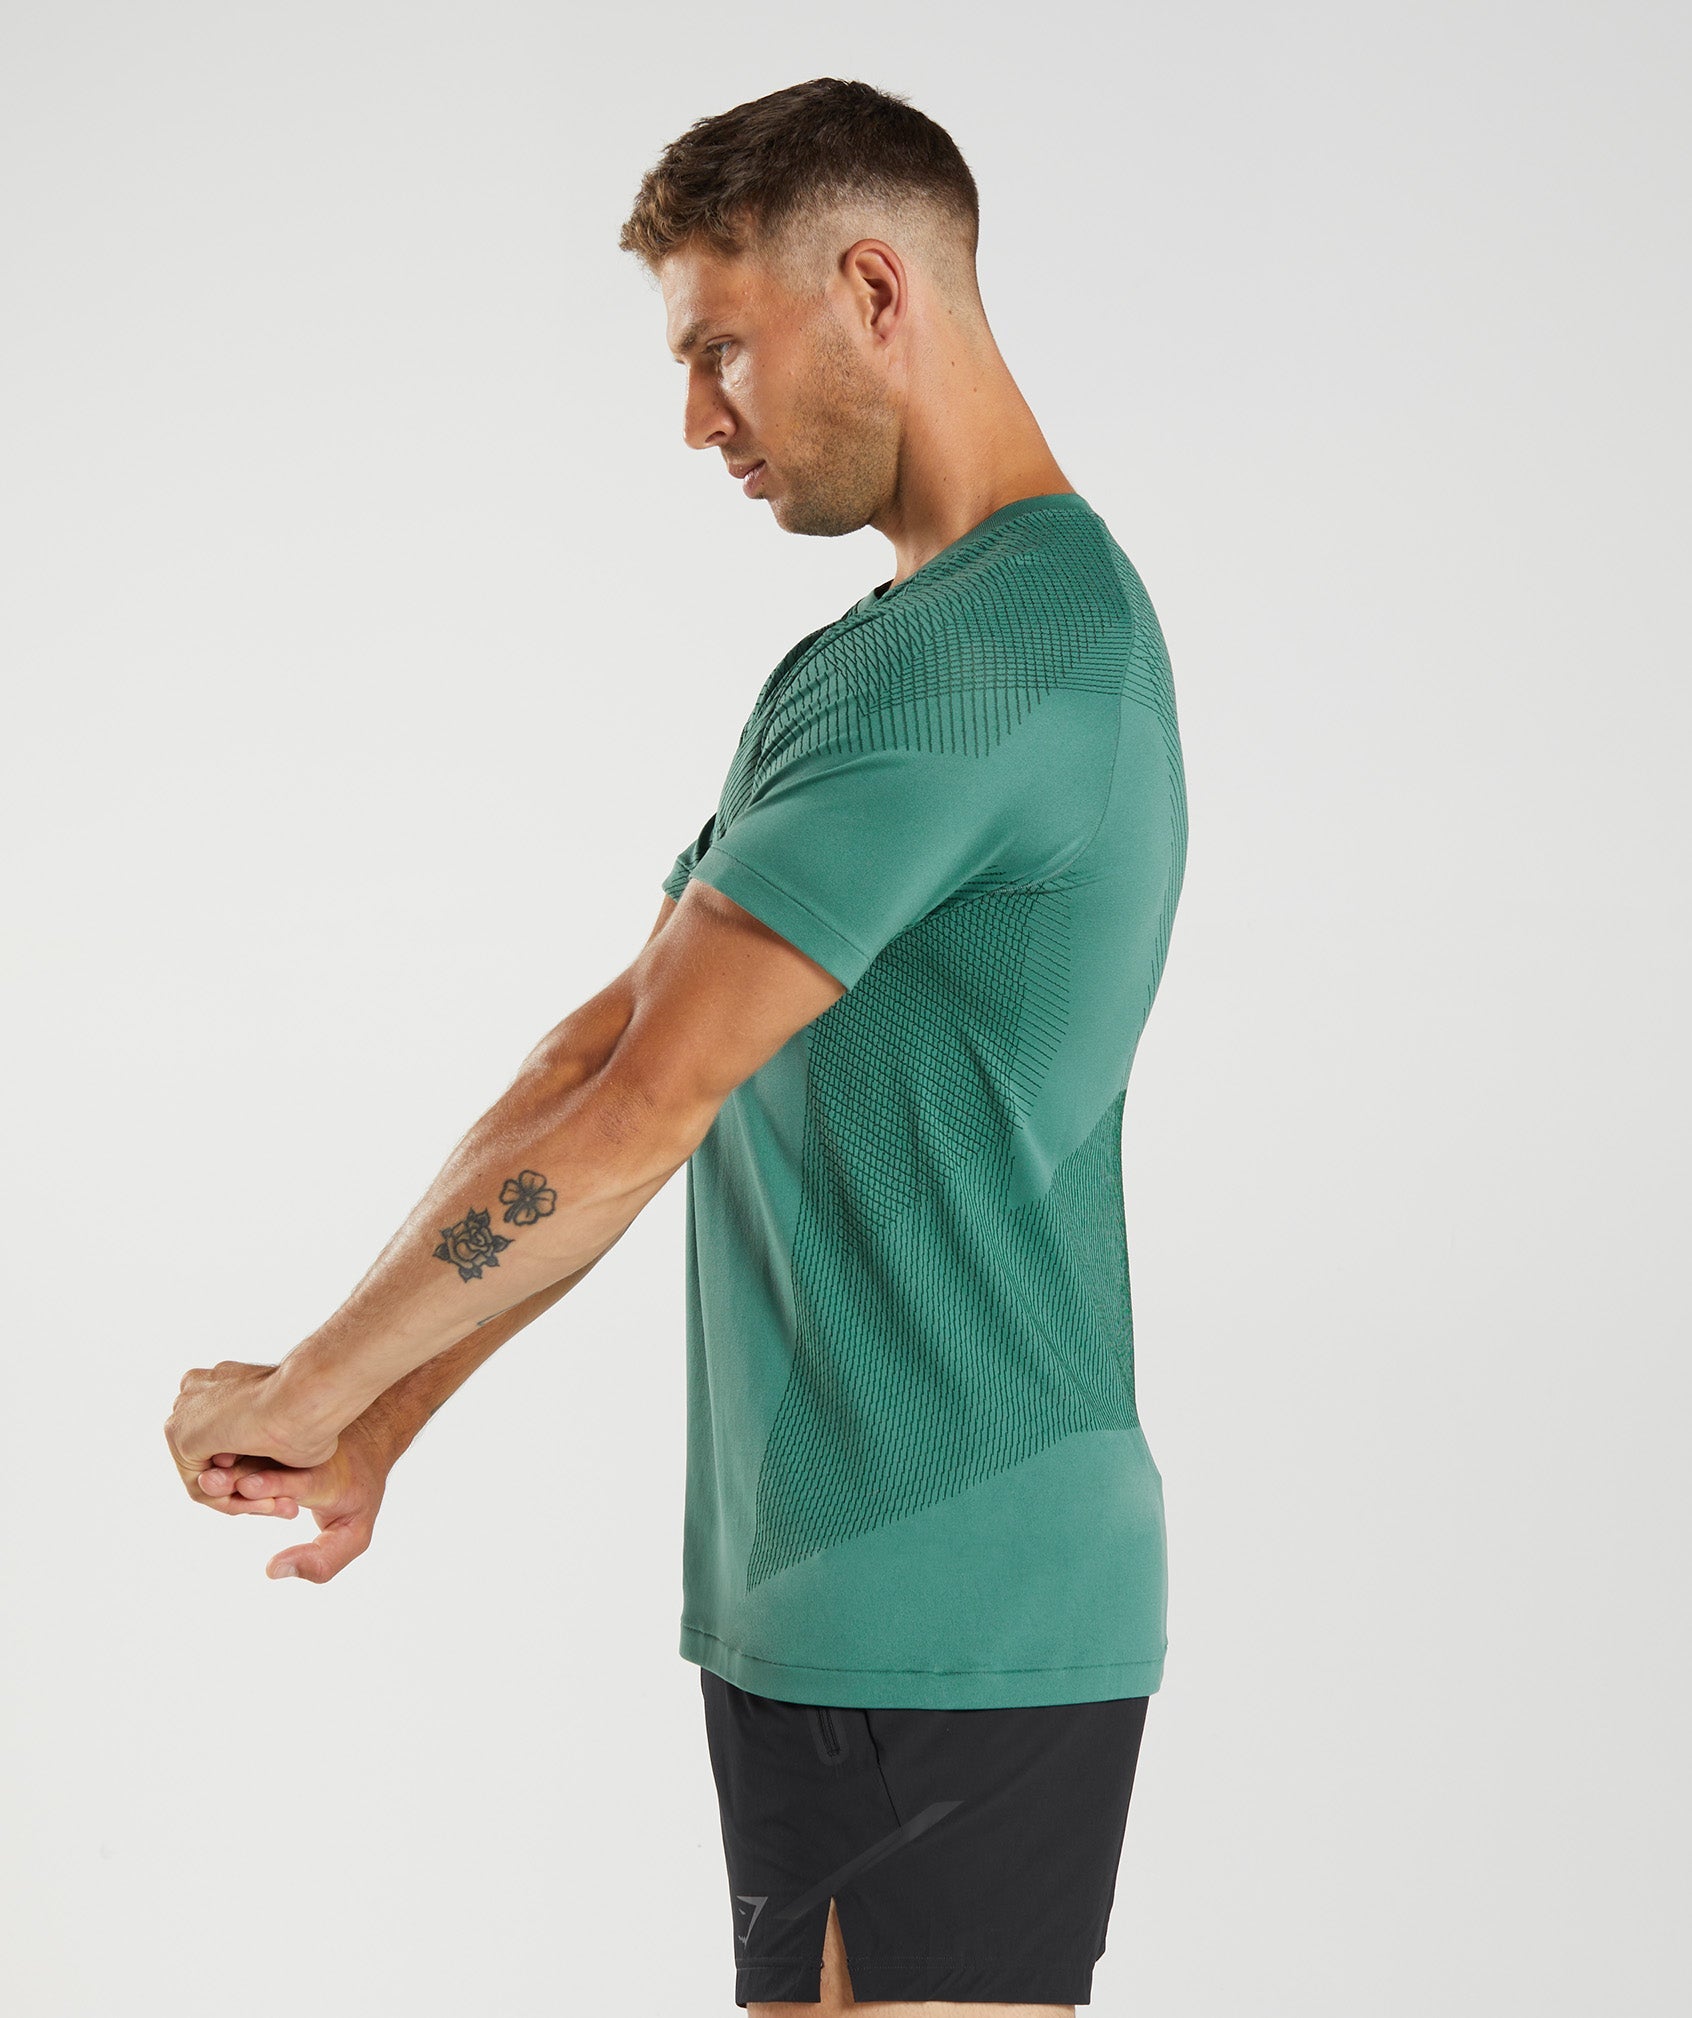 Apex Seamless T-Shirt in Hoya Green/Woodland Green - view 3